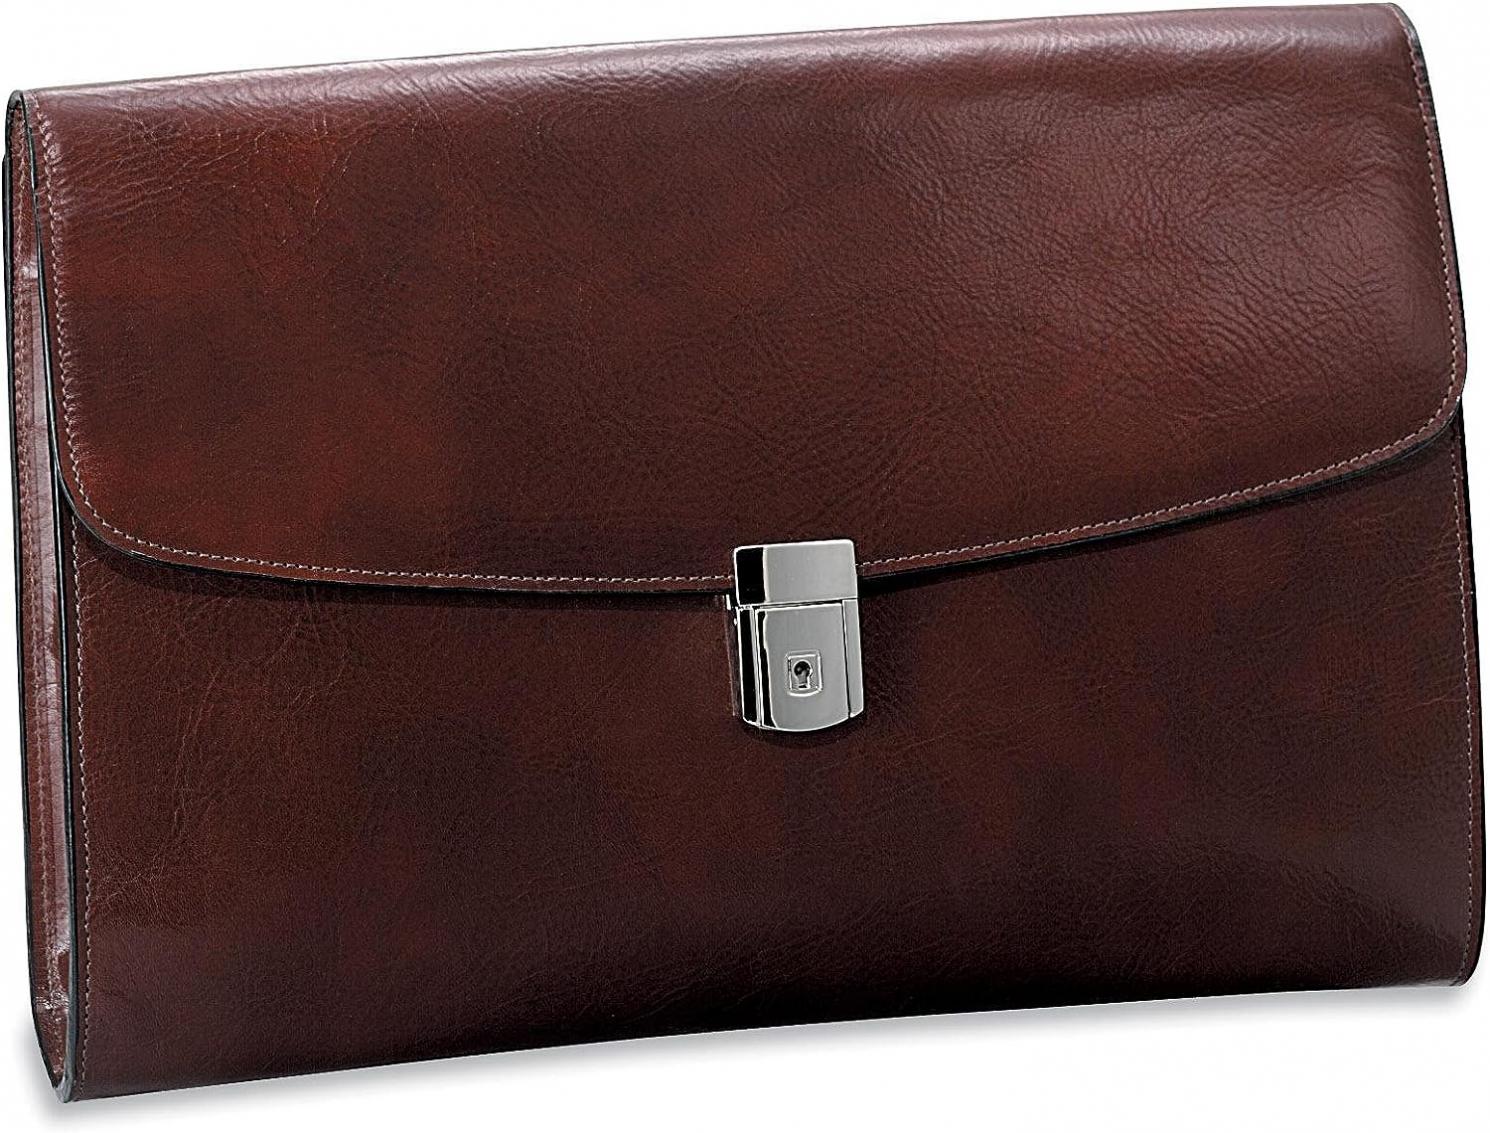 CrookhornDavis Men's Hand Stained Italian Leather Underarm Briefcase, Cognac